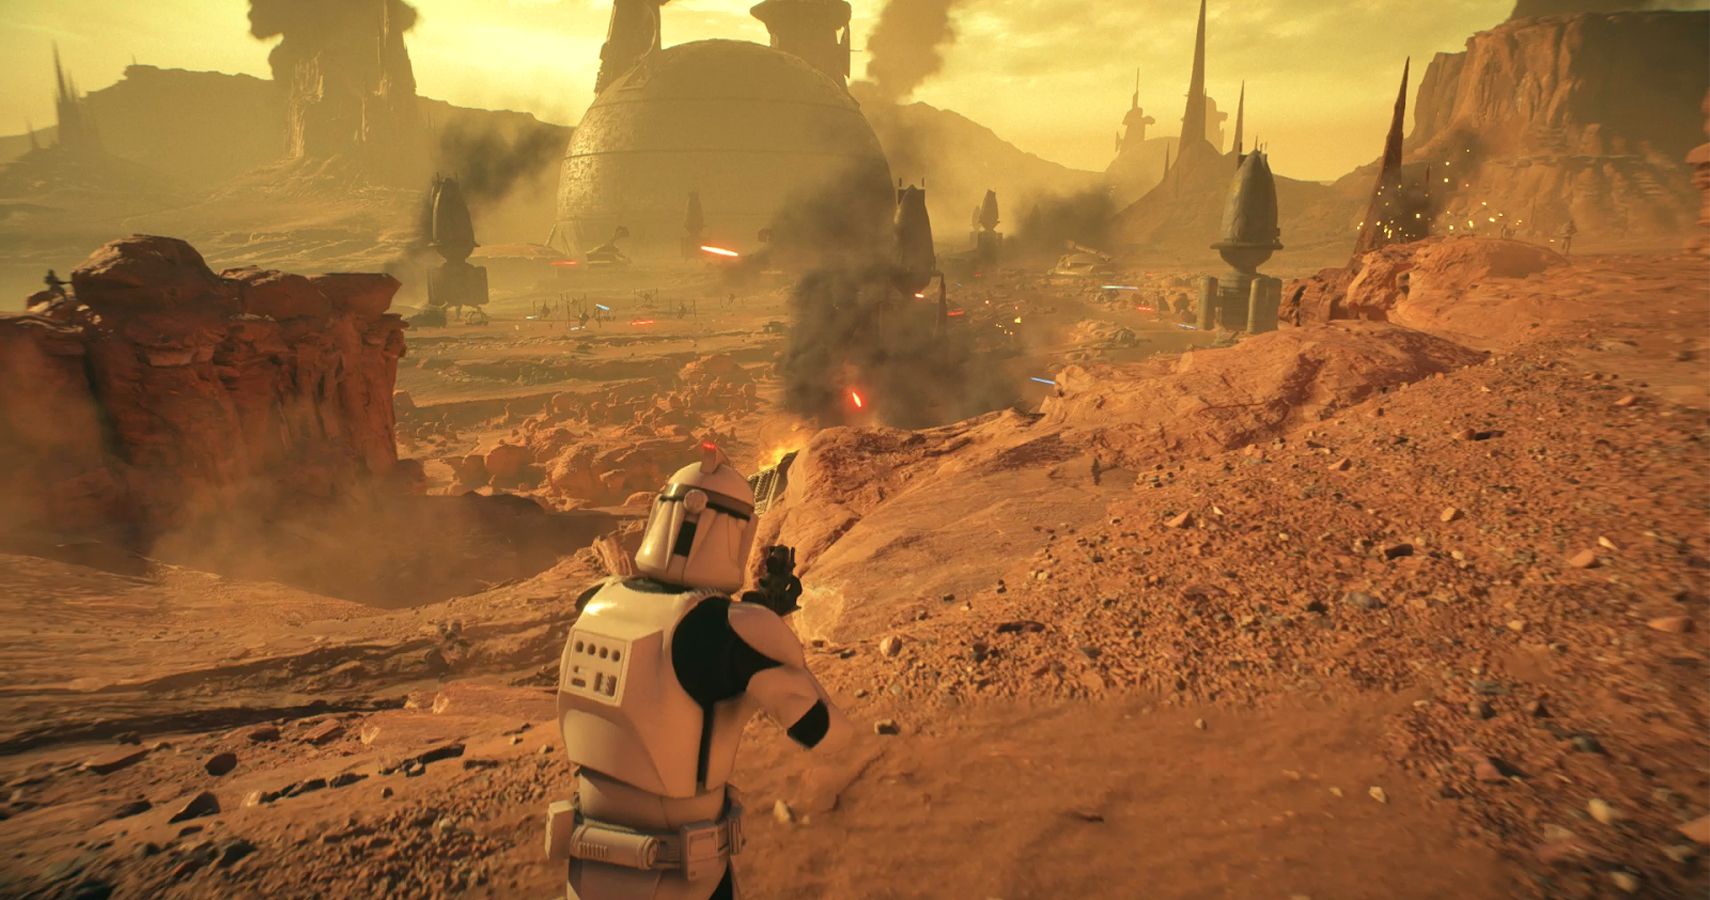 Star Wars Battlefront II Adds Clone Wars Content